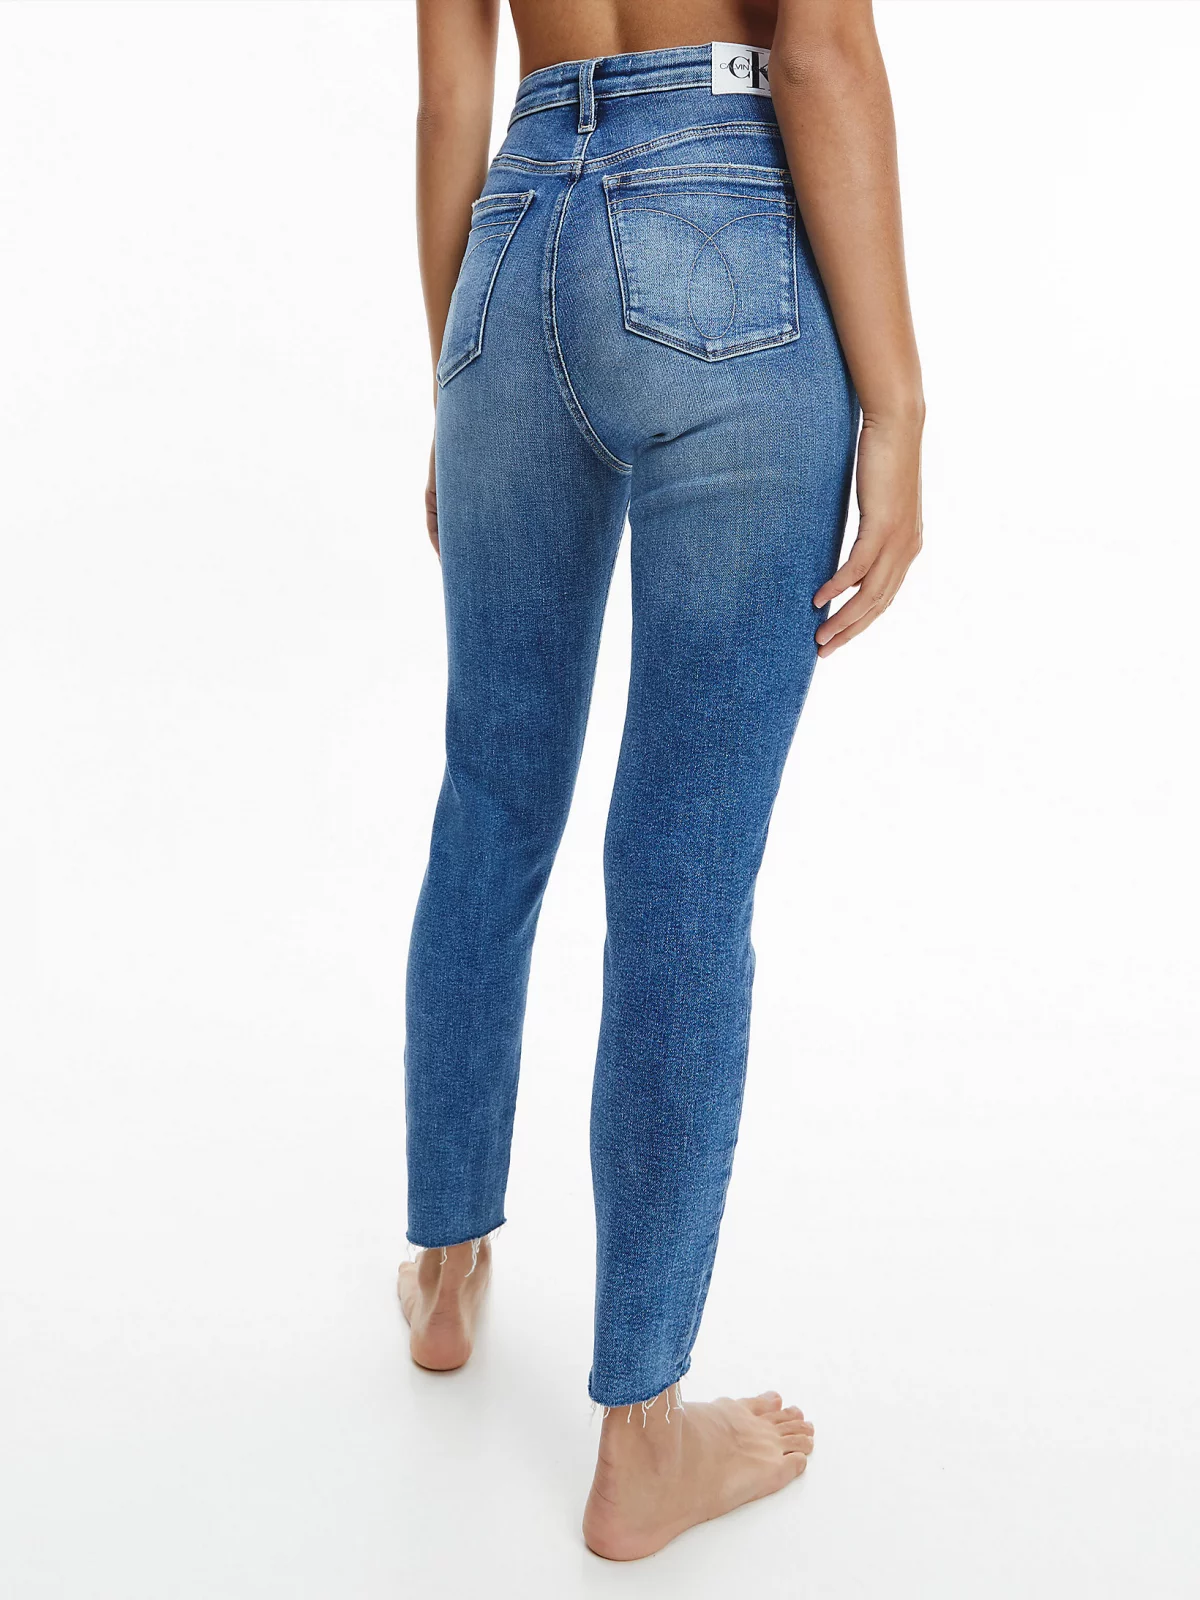 MODA DONNA Jeans Ricamato Onado Jeggings & Skinny & Slim Blu M sconto 96% 